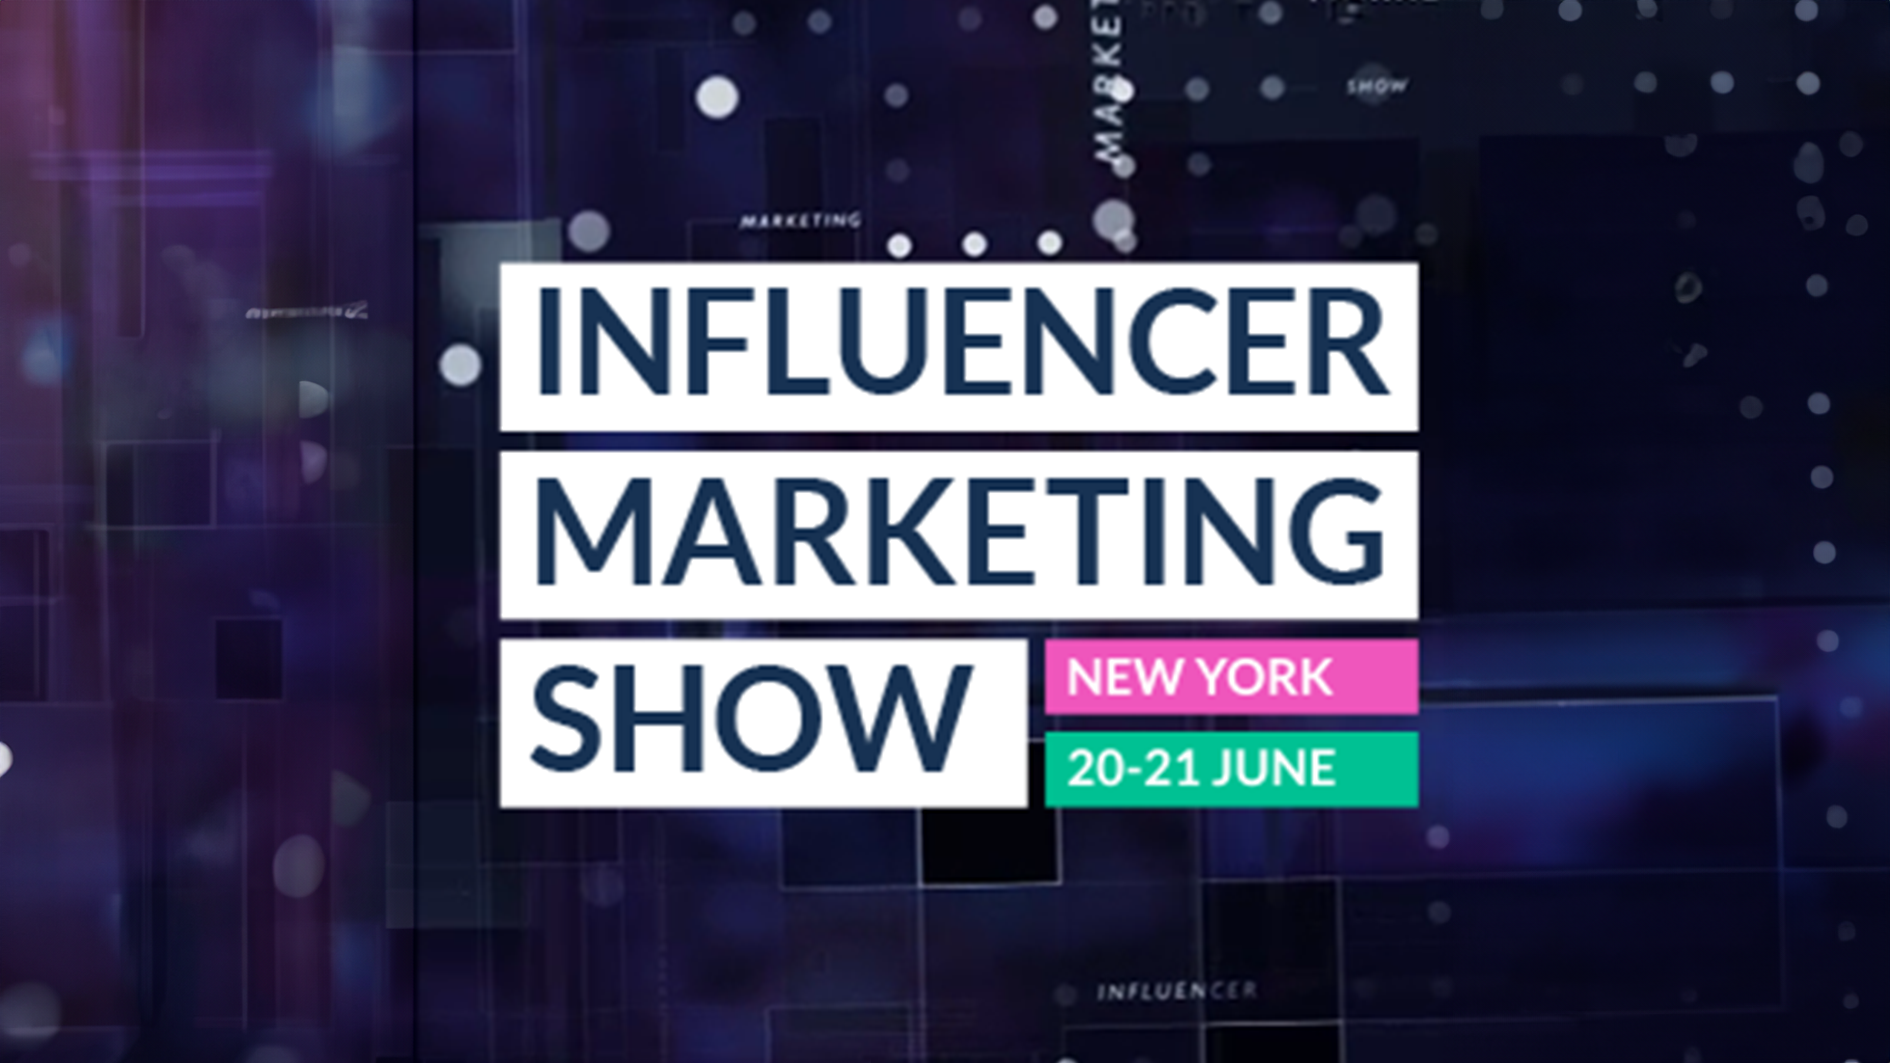 IMS New York – Influencer Marketing Show